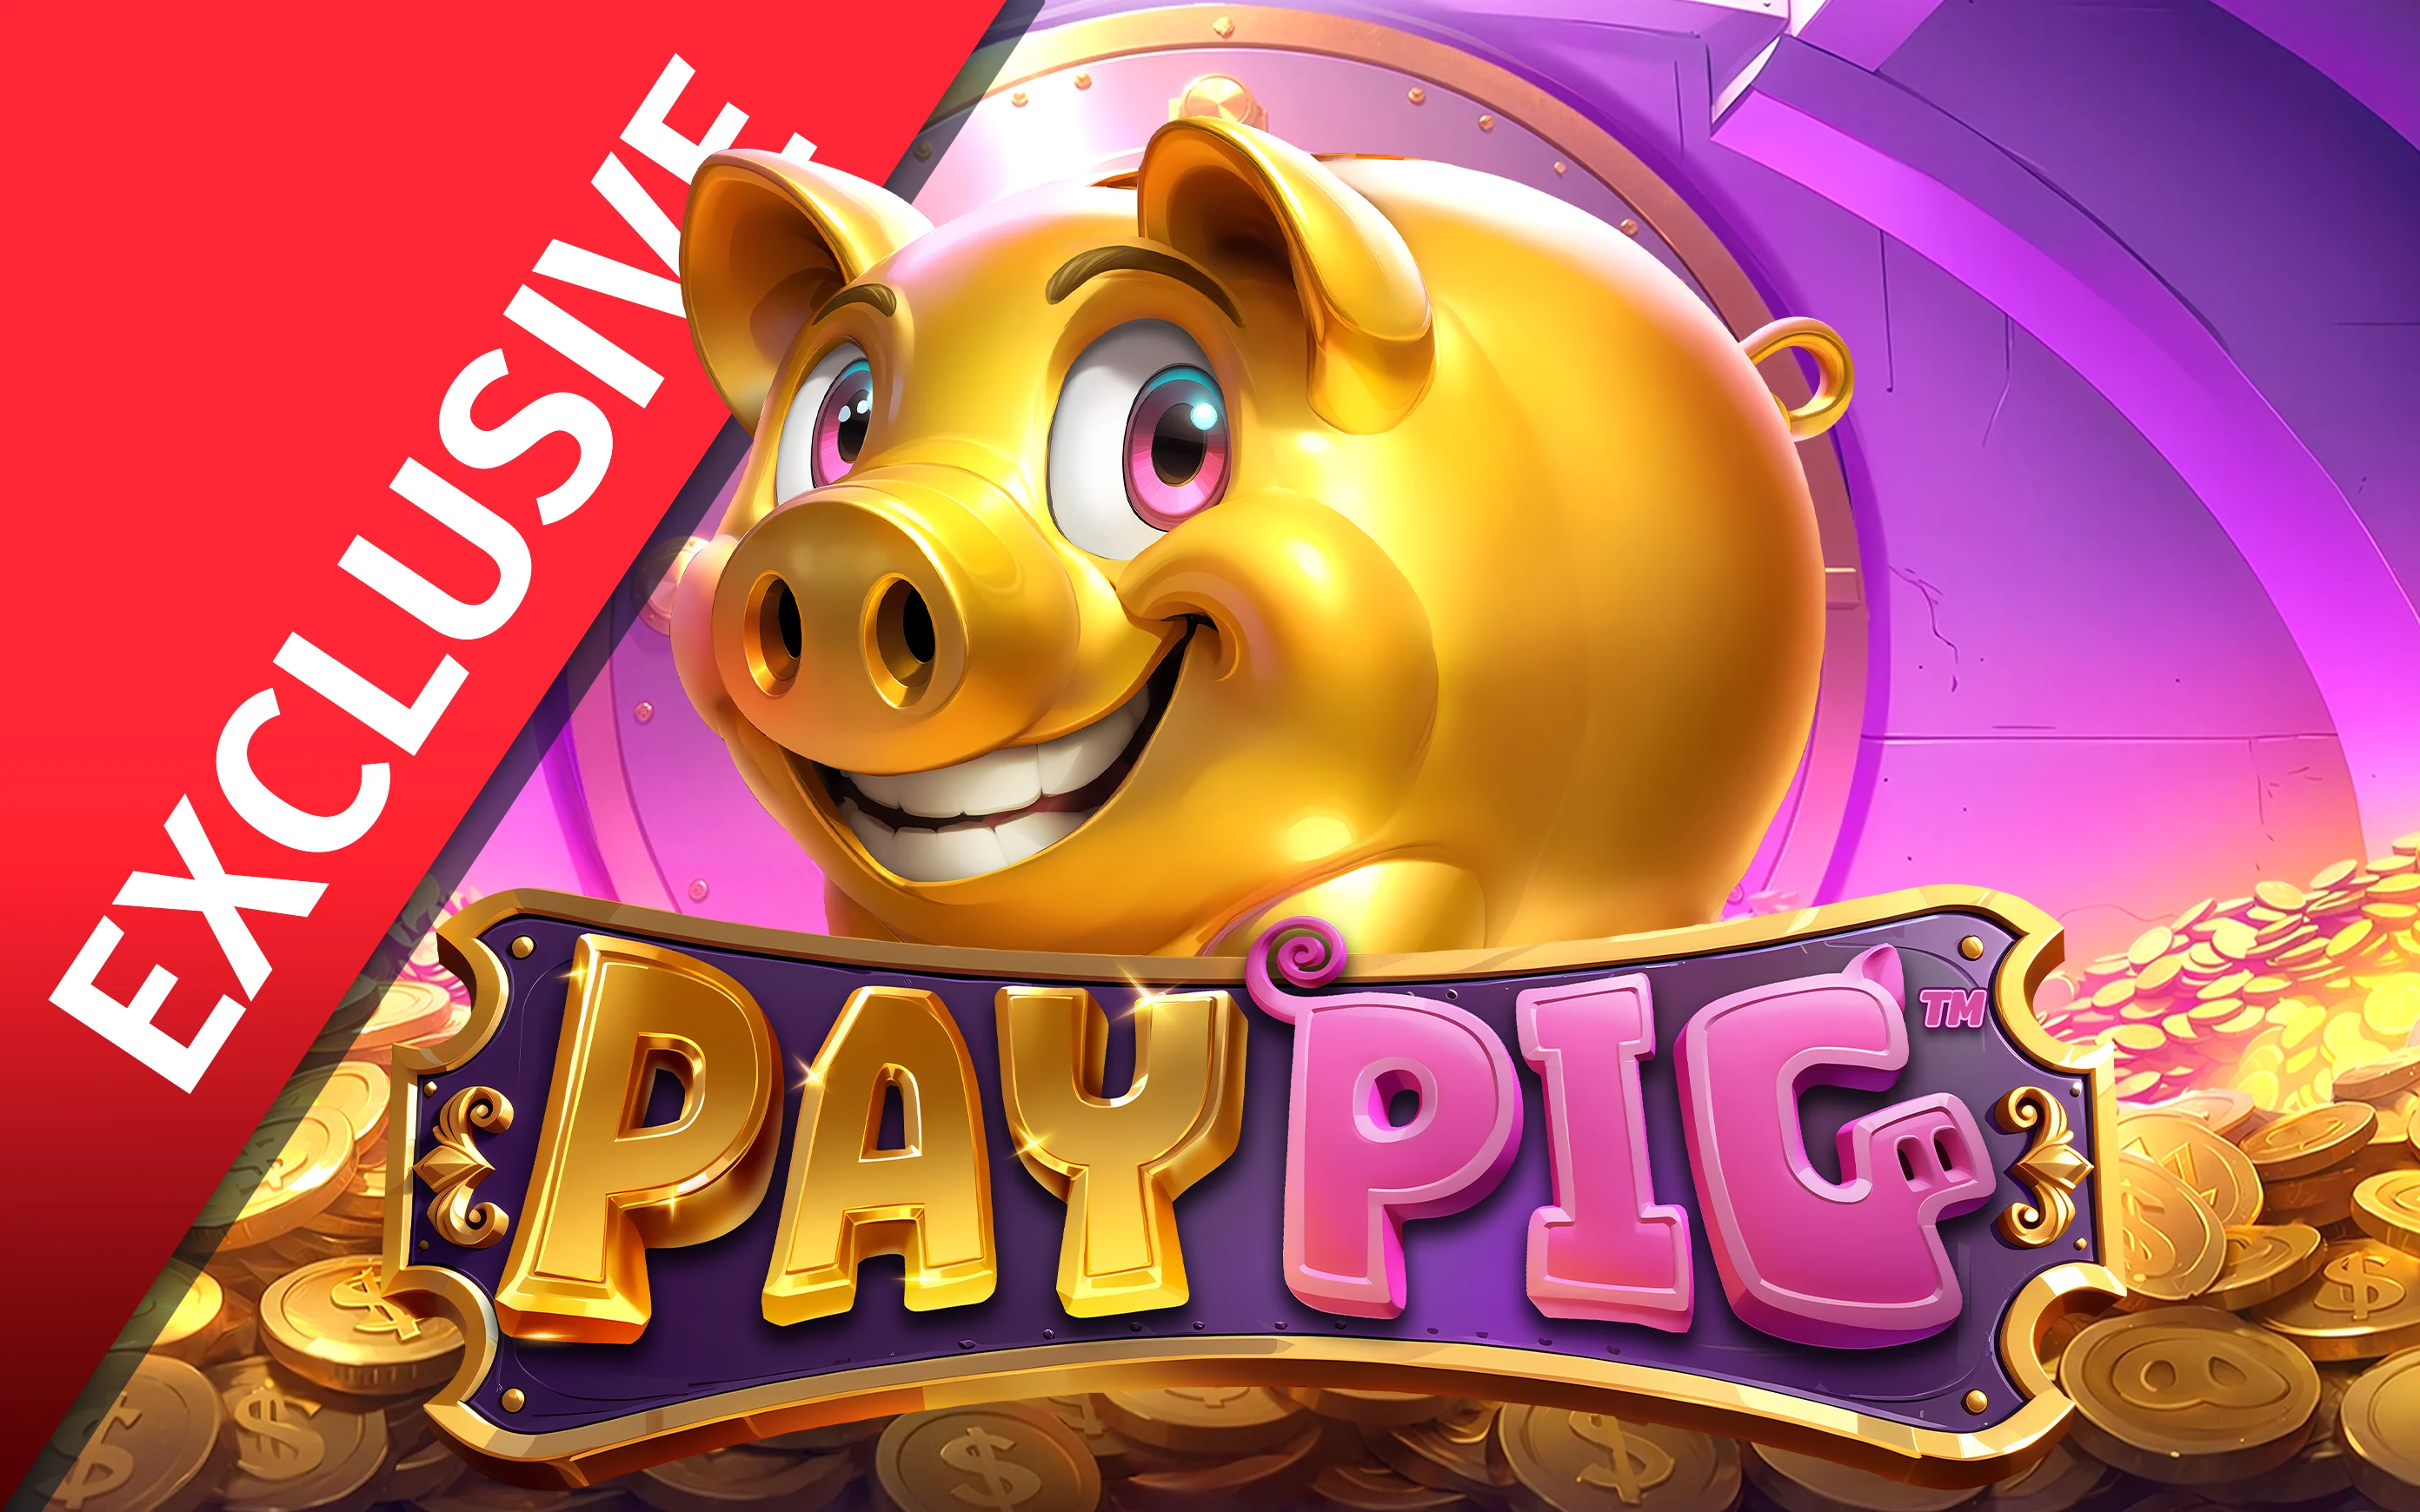 Starcasino.be online casino üzerinden Pay Pig oynayın